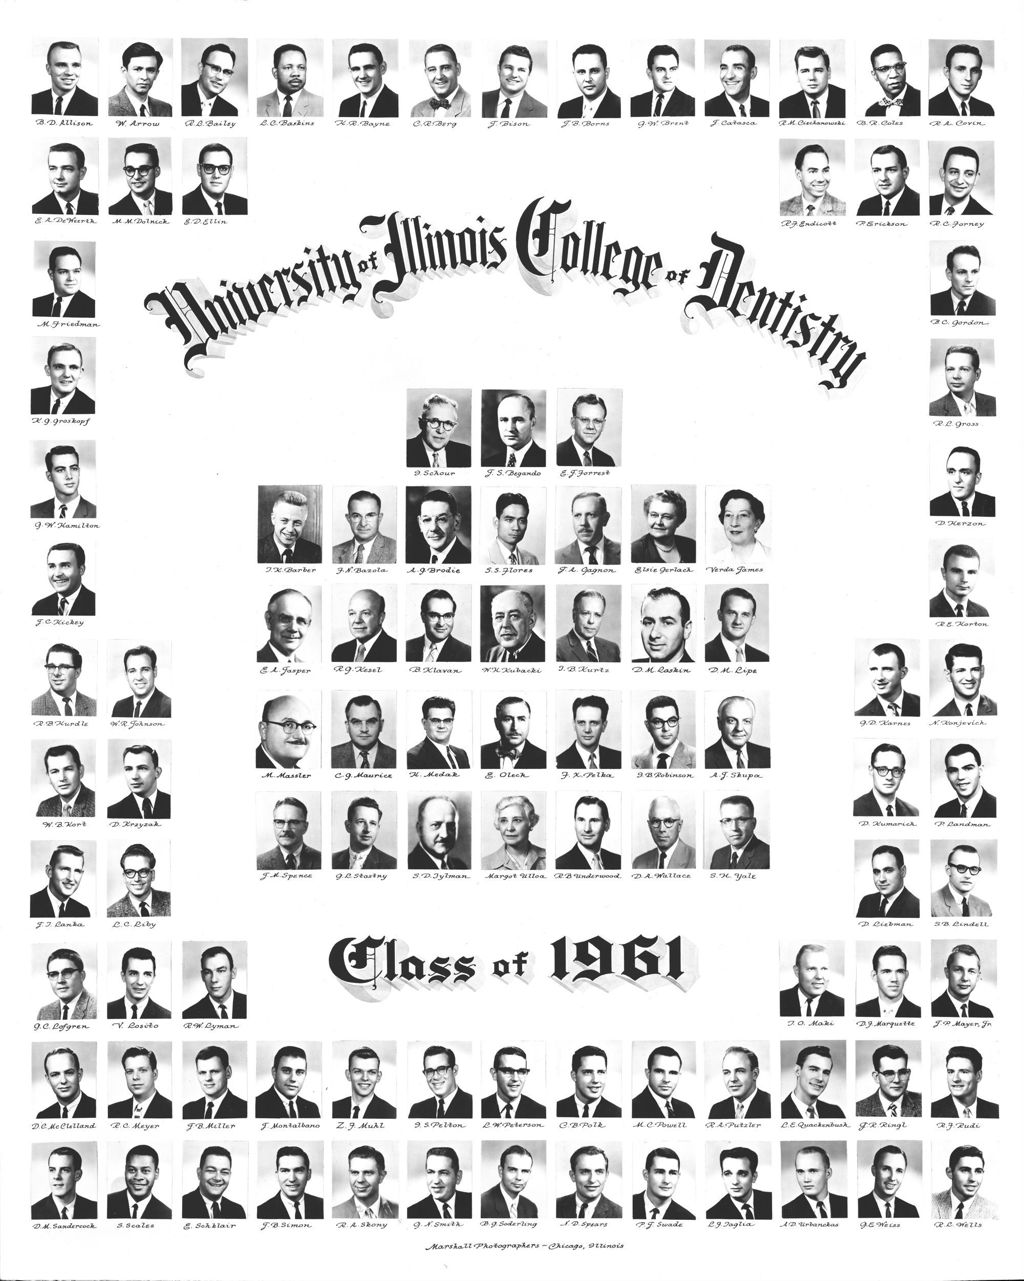 1961 graduating class, University of Illinois College of Dentistry